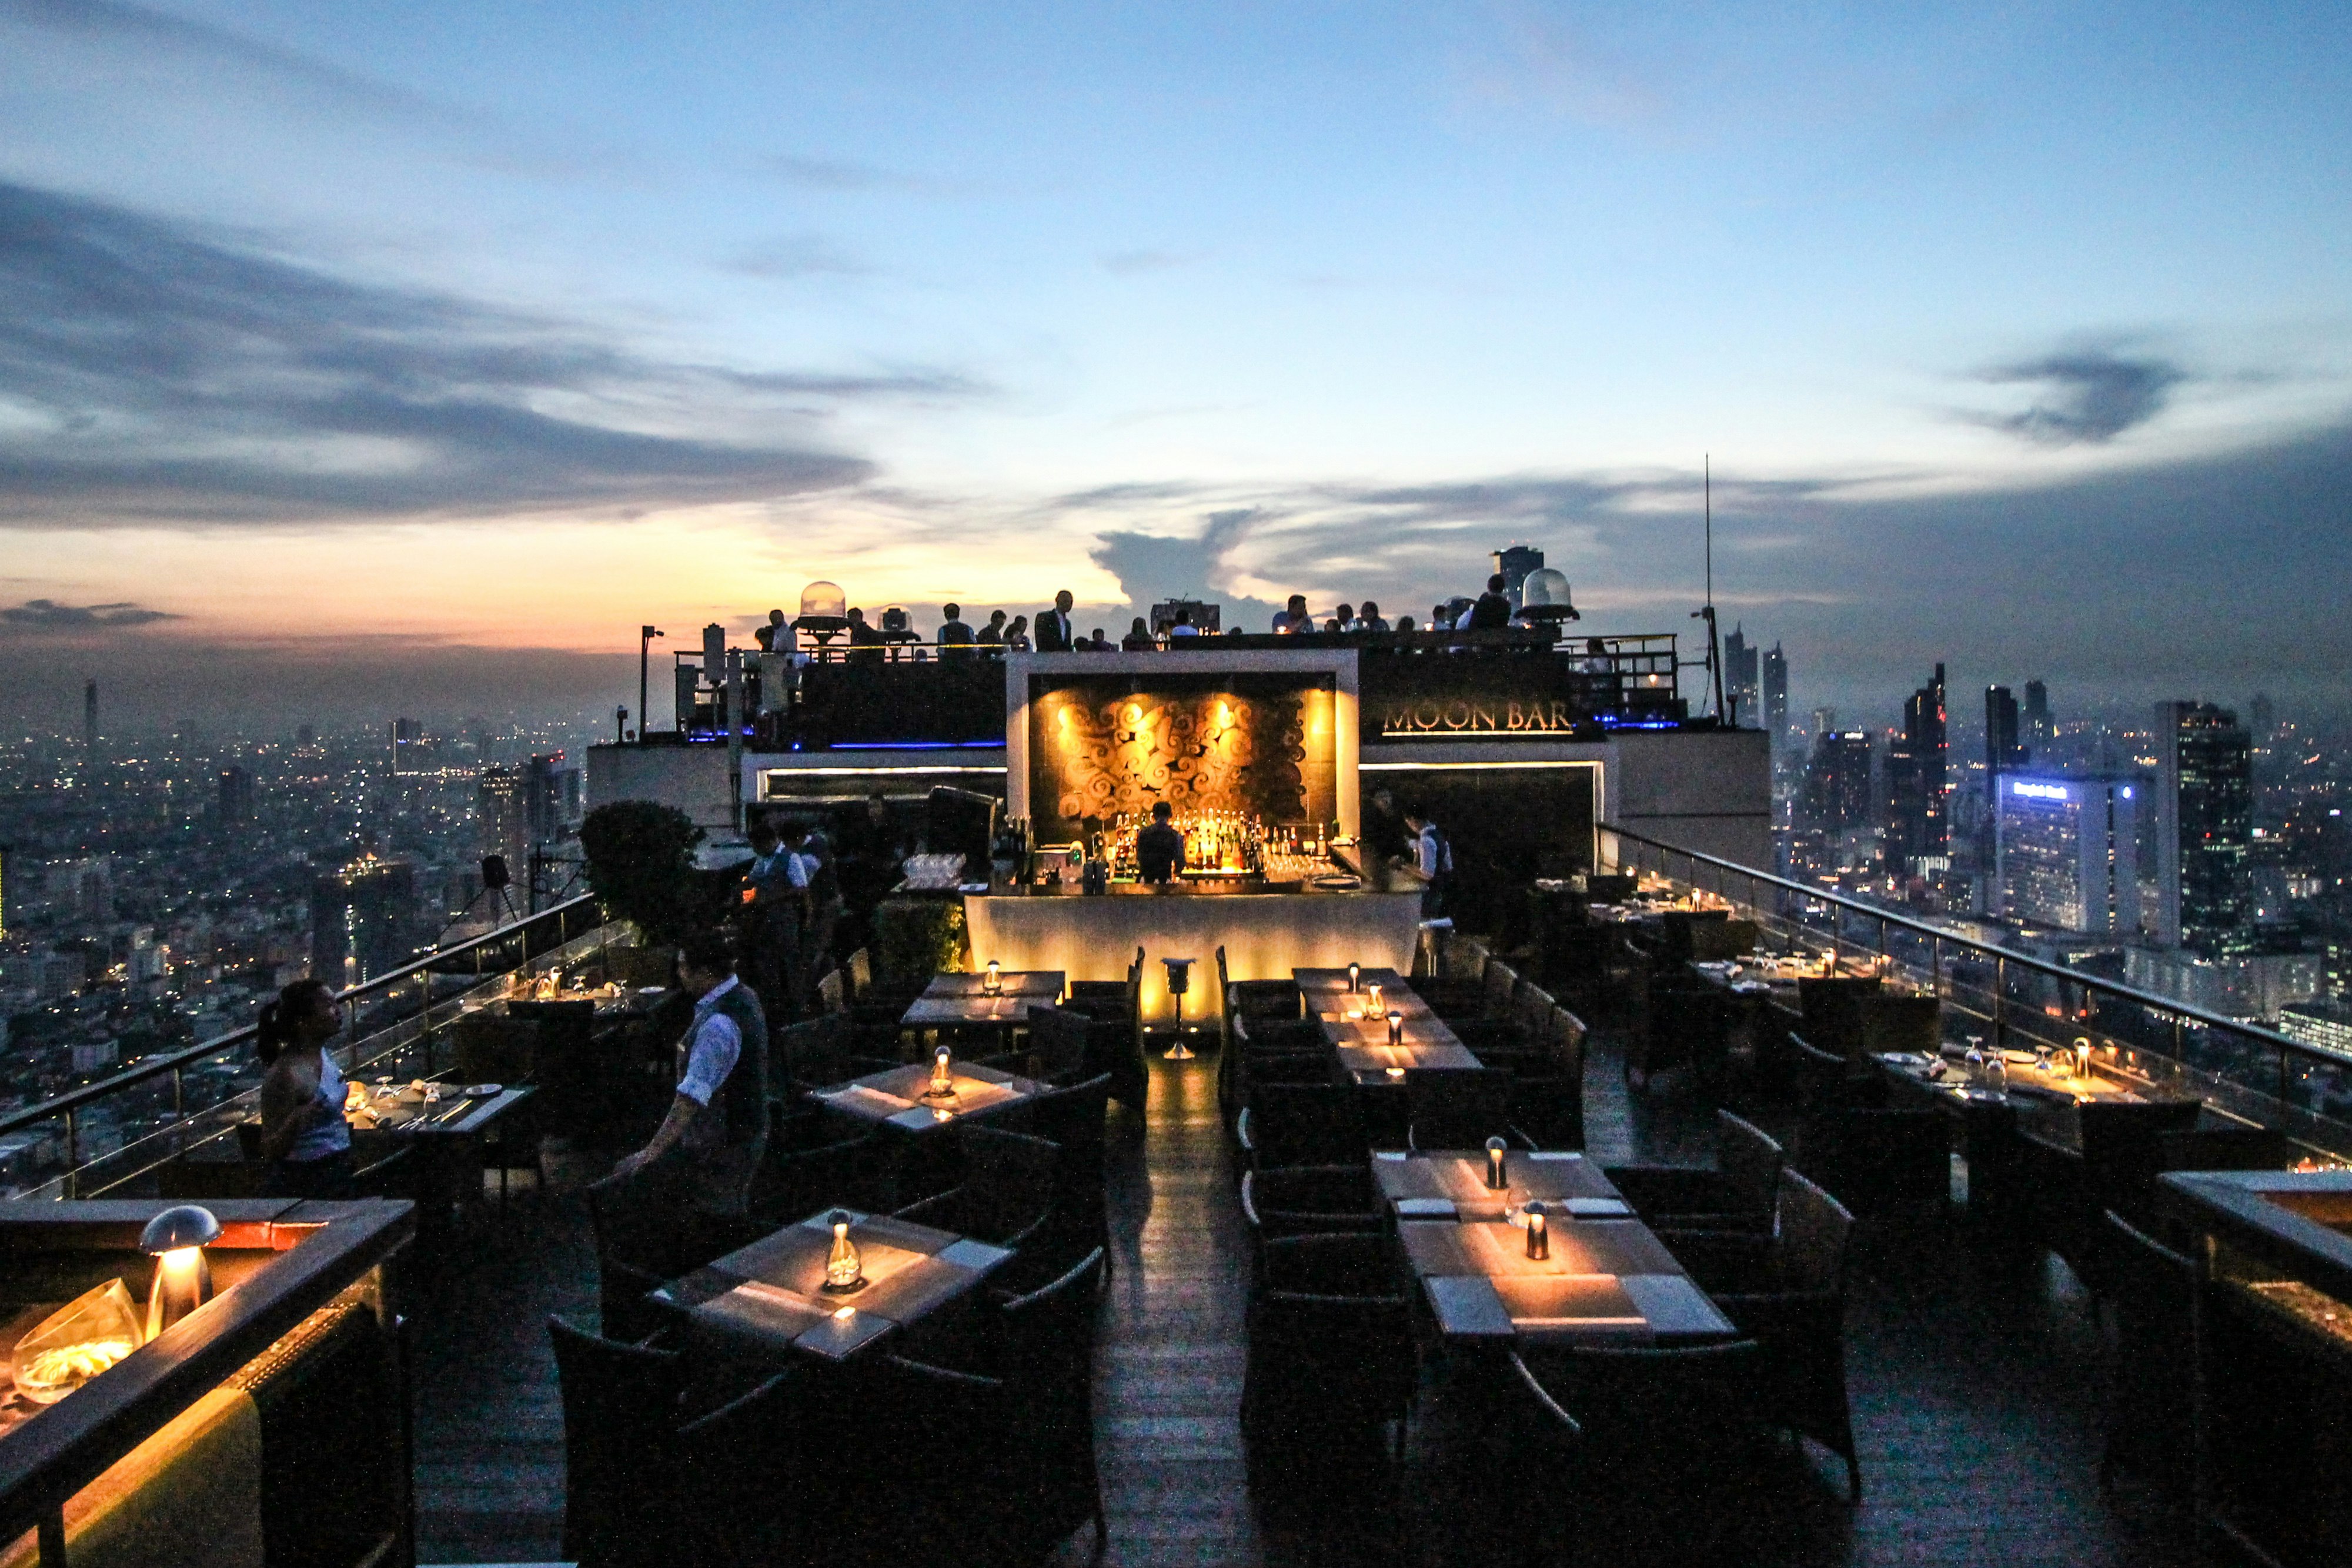 Patrons of Moon Bar are drinking and socialising at dusk. The Bangkok skyline is visible